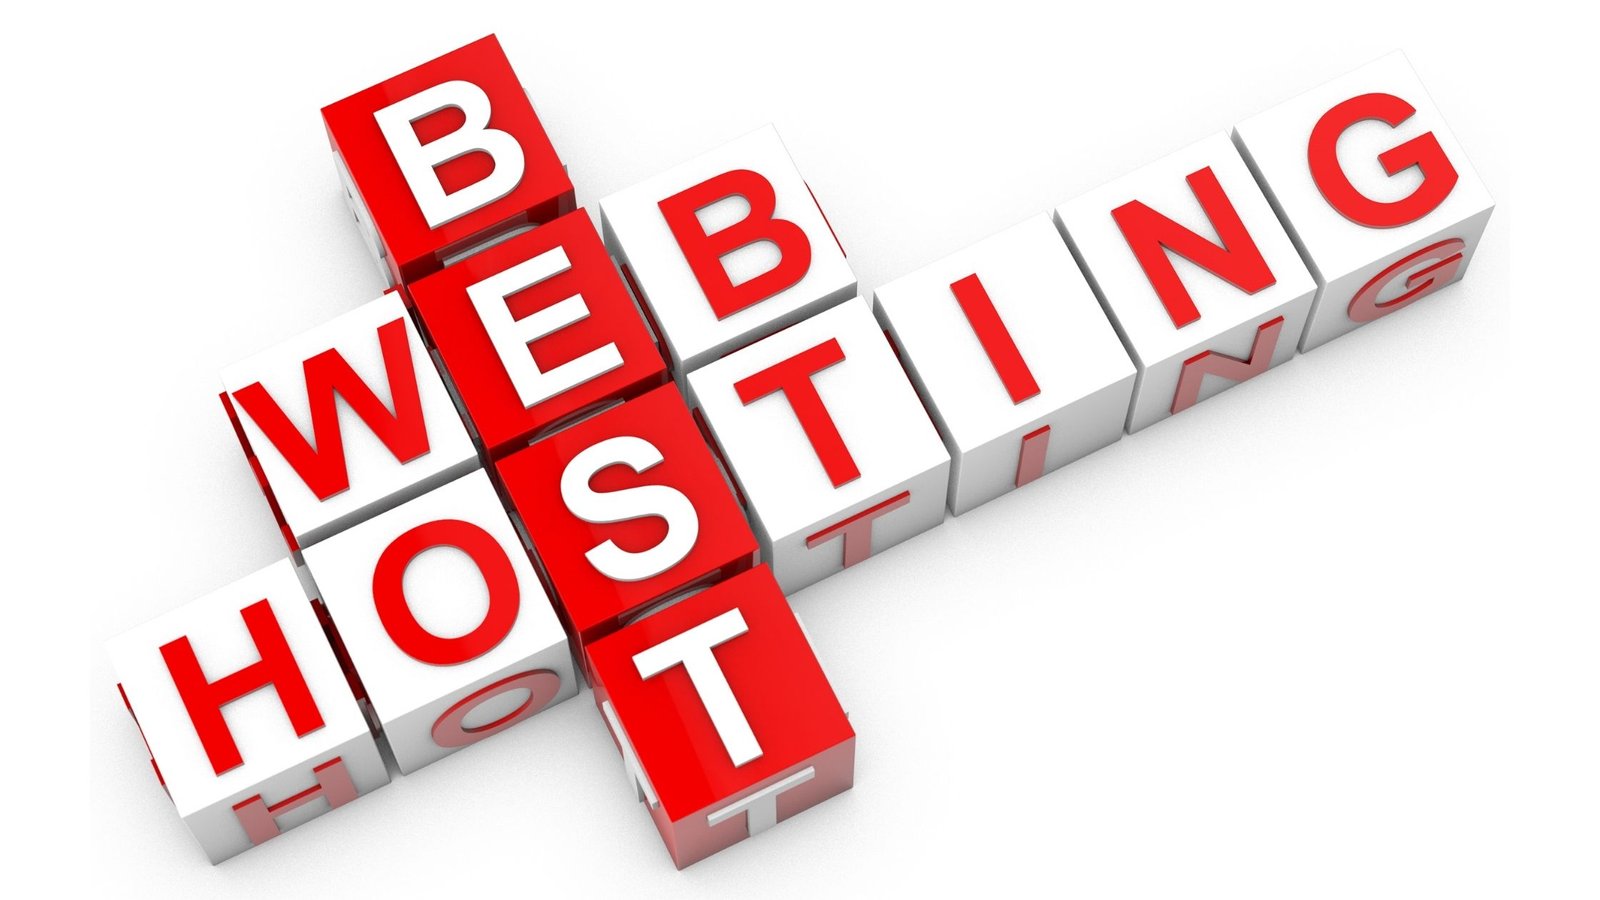 Image best web hosting for wordpress | DigitalPro